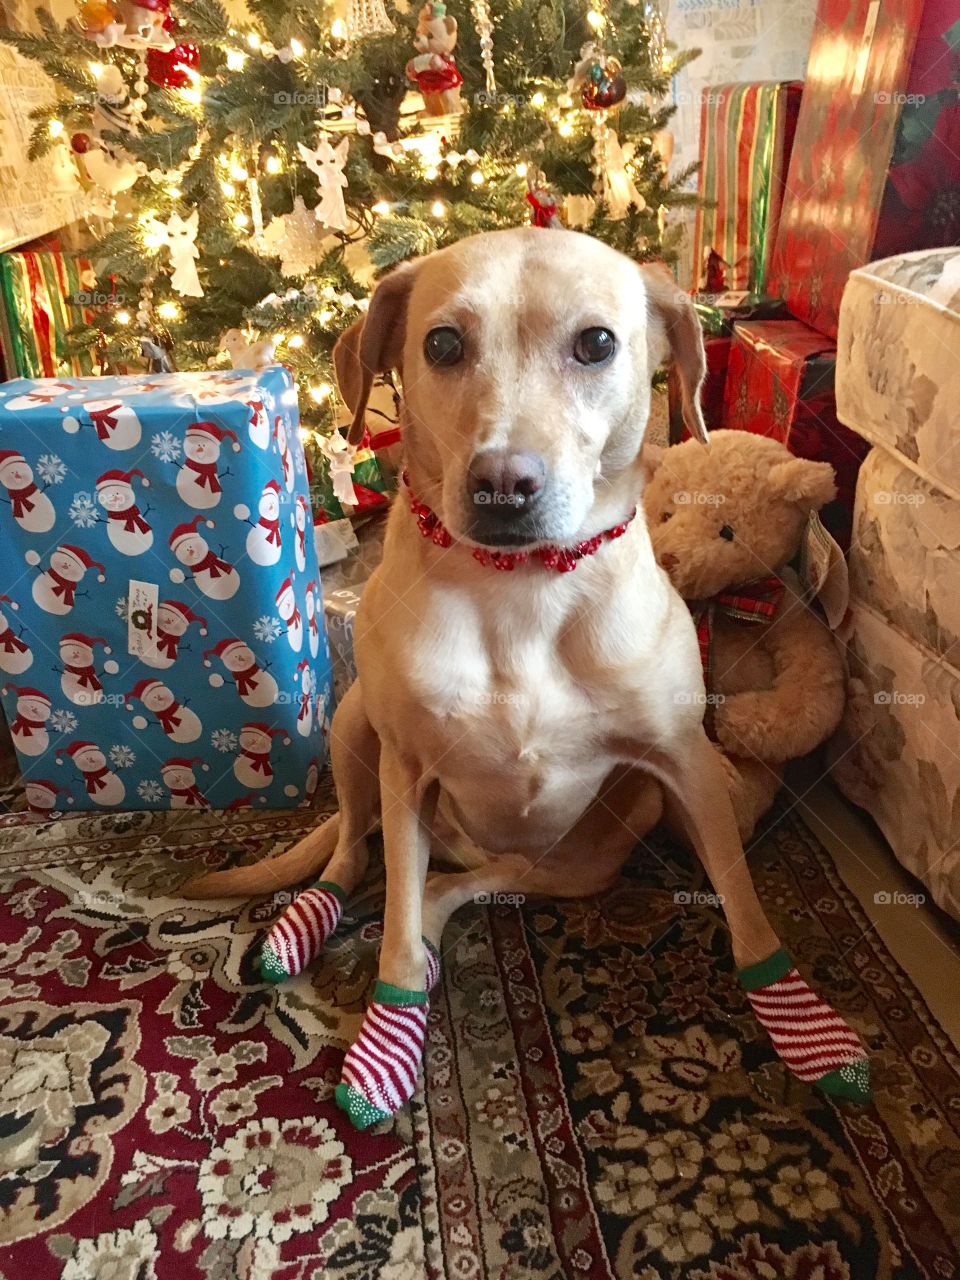 Rummy in her Christmas Socks!